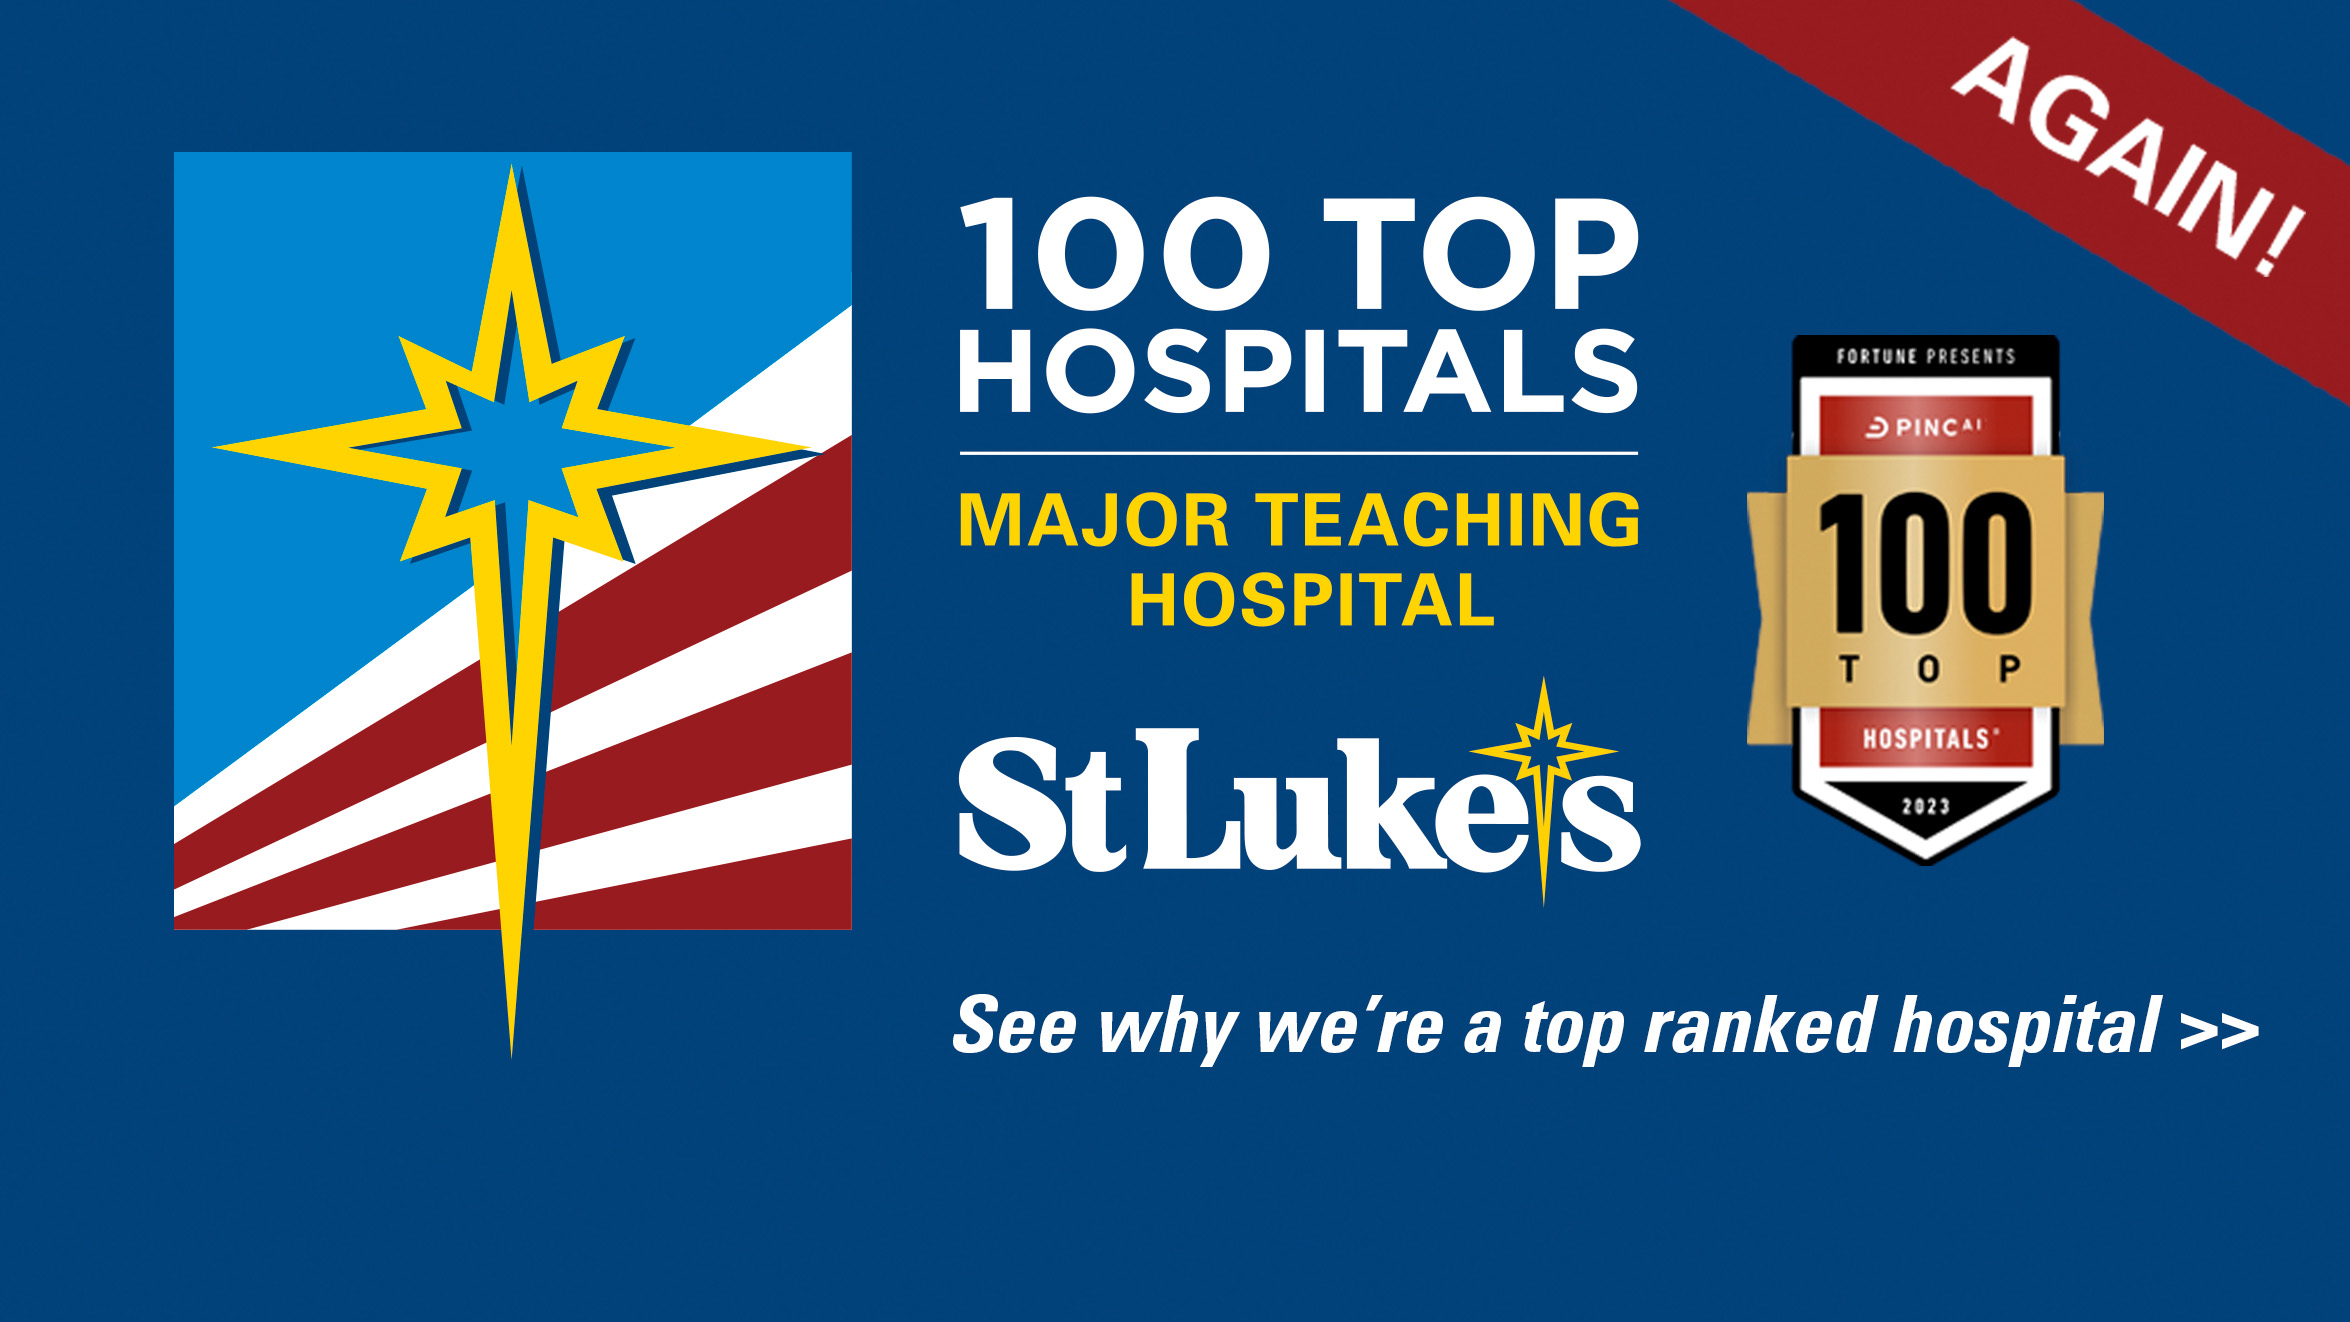 100 Top Hospitals - Major Teaching Hospital